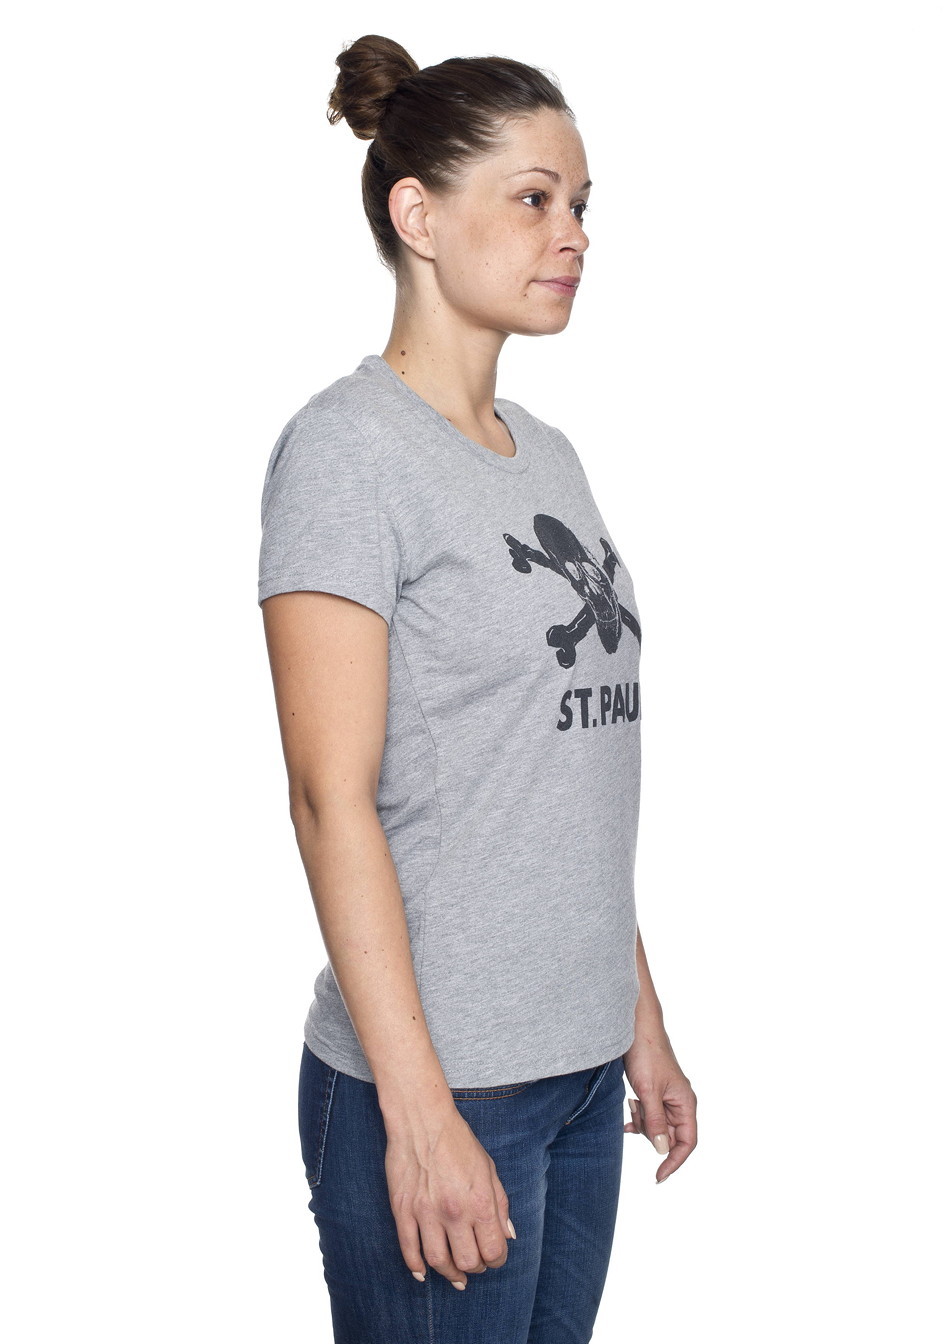 Women's skull and crossbones T-shirt, grey